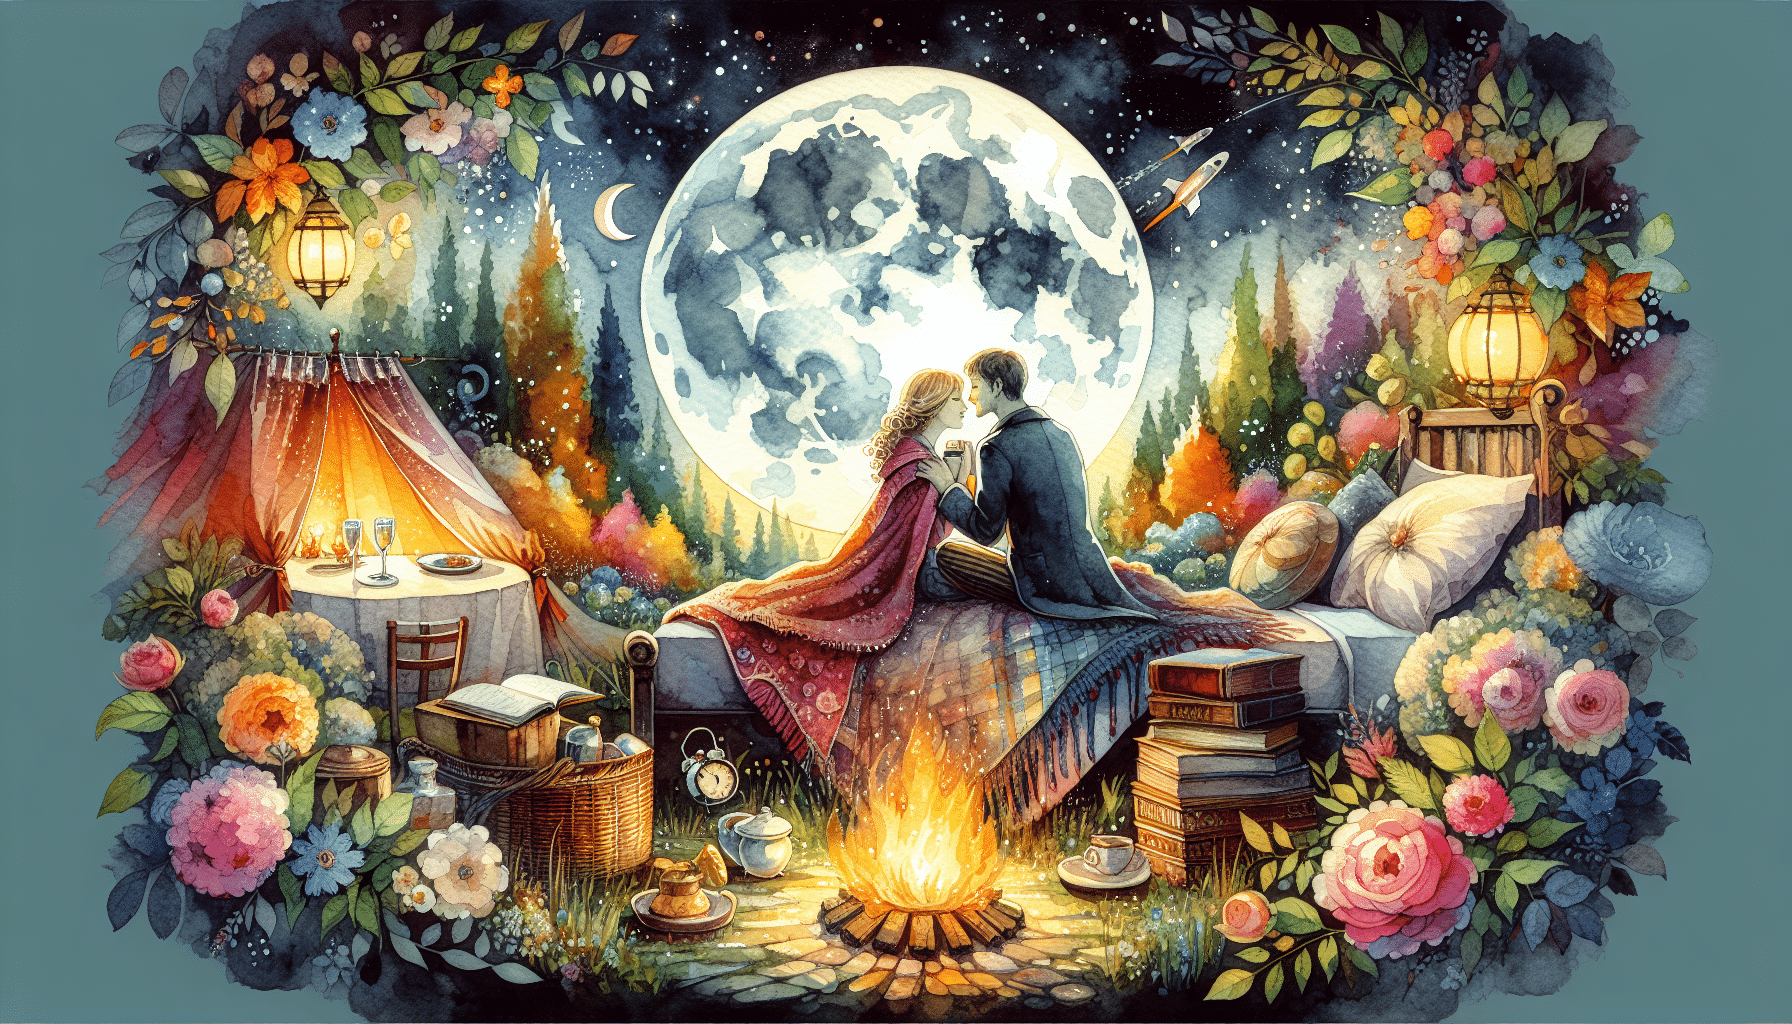 Moonlit Serenade Romantic Tales for a Cozy Night In